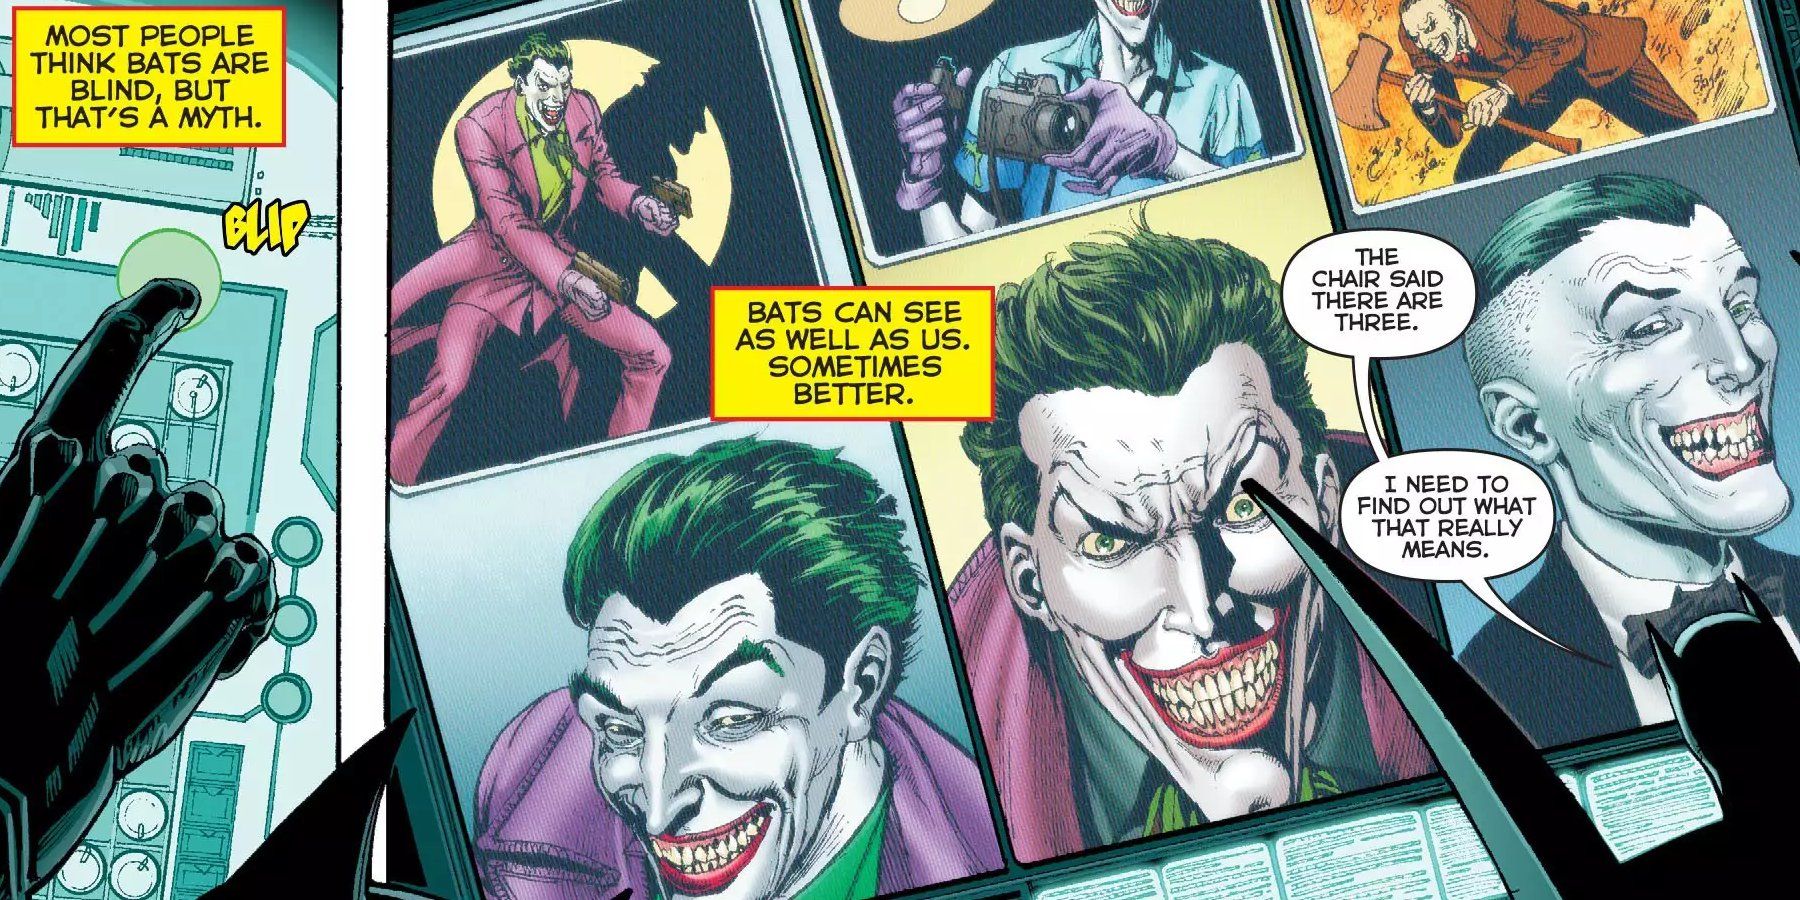 There are 3 Jokers DC Rebirth Batman